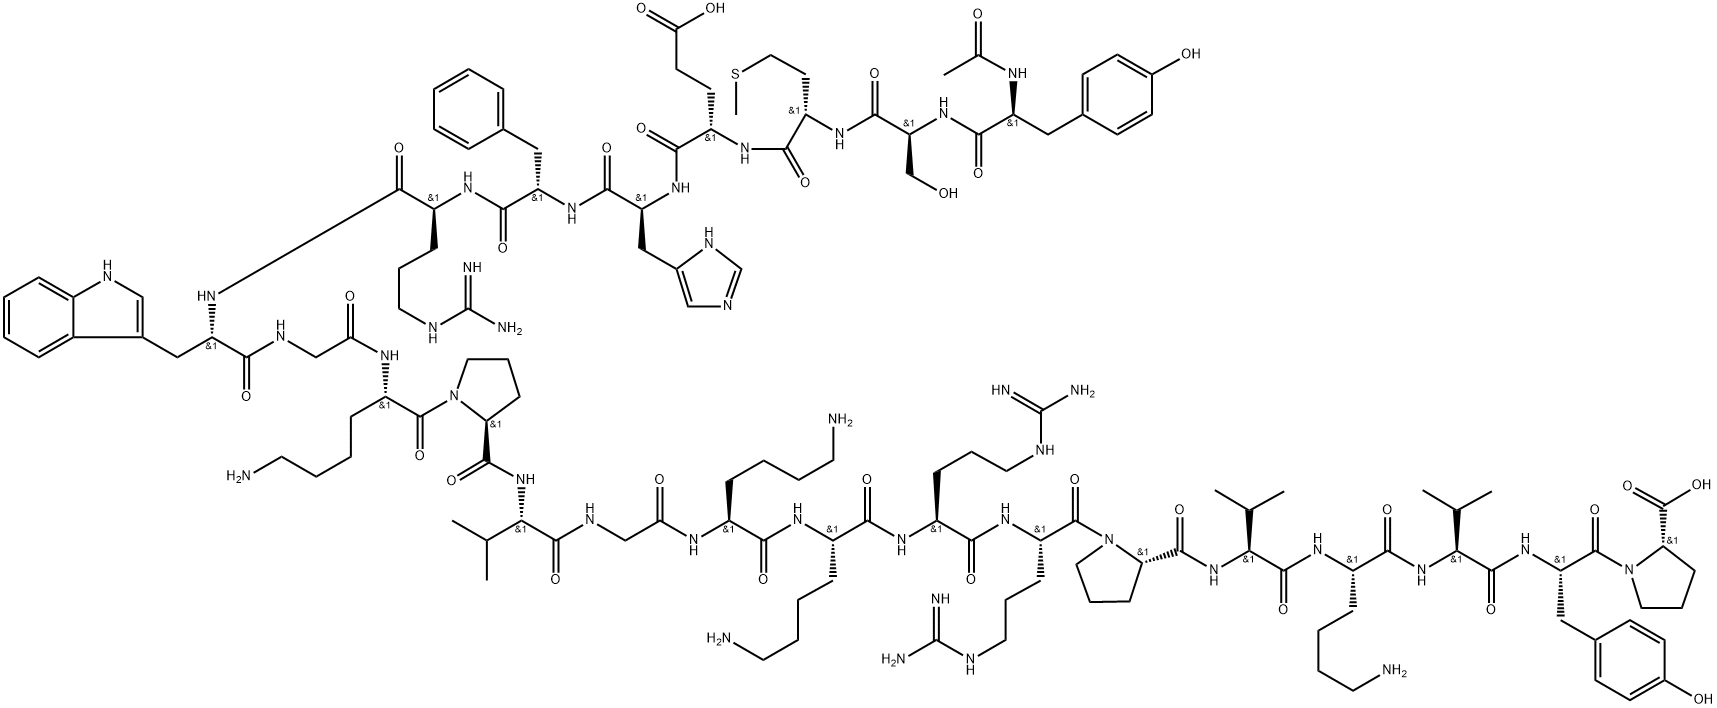 Acetyl-ACTH (2-24) (human, bovine, rat) Structure